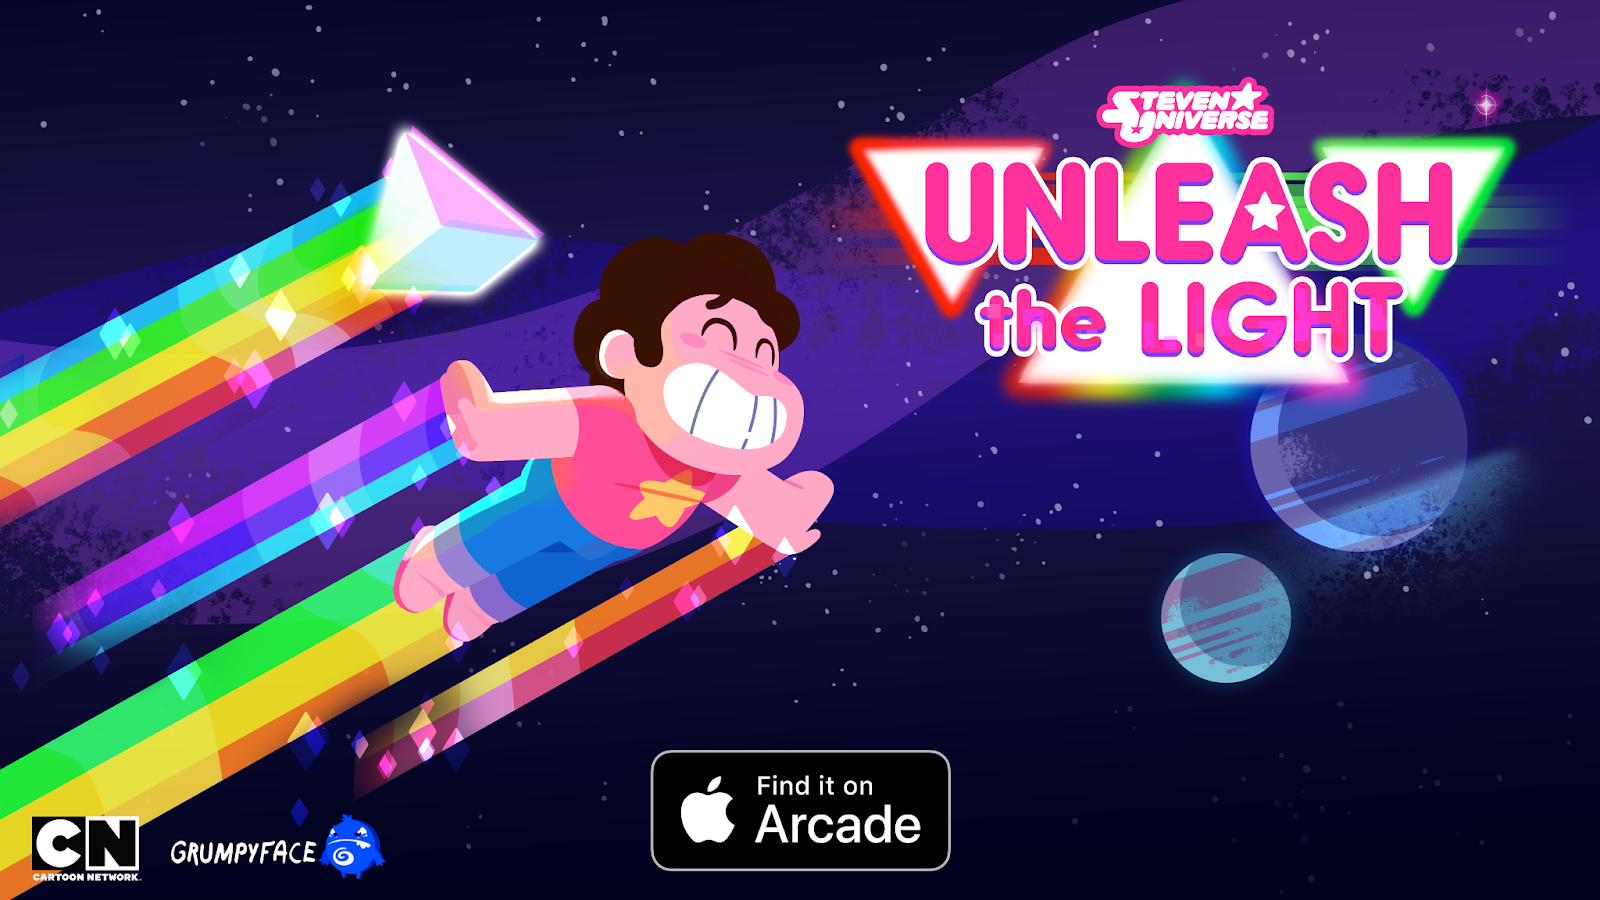 Grumpyface Studios: Steven Universe: Unleash the Light Available now on Apple Arcade!